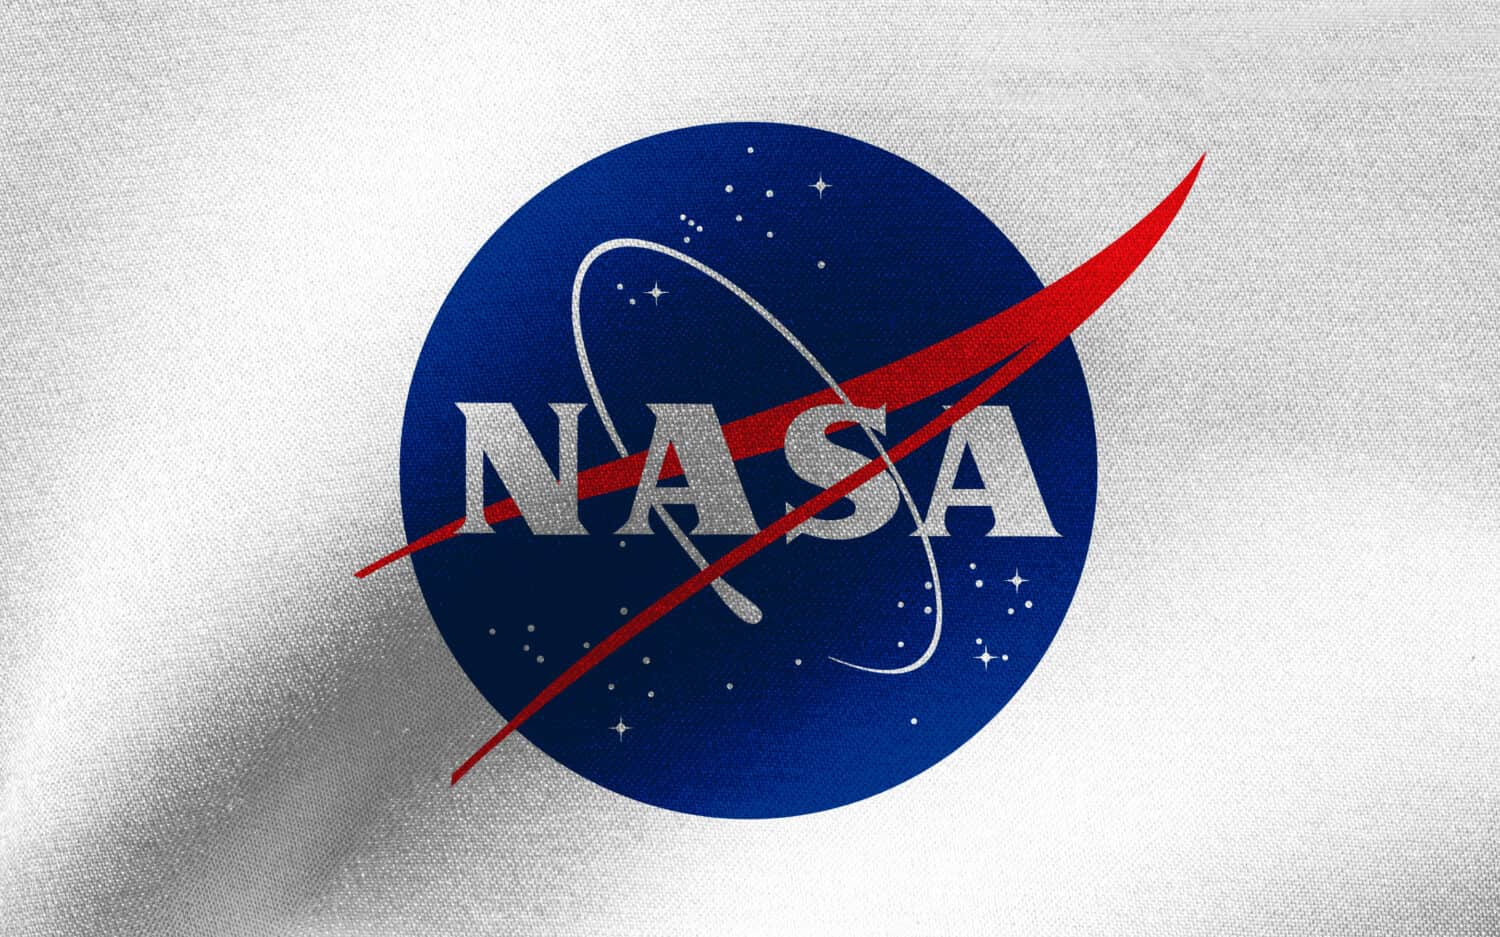 Closeup of NASA flag